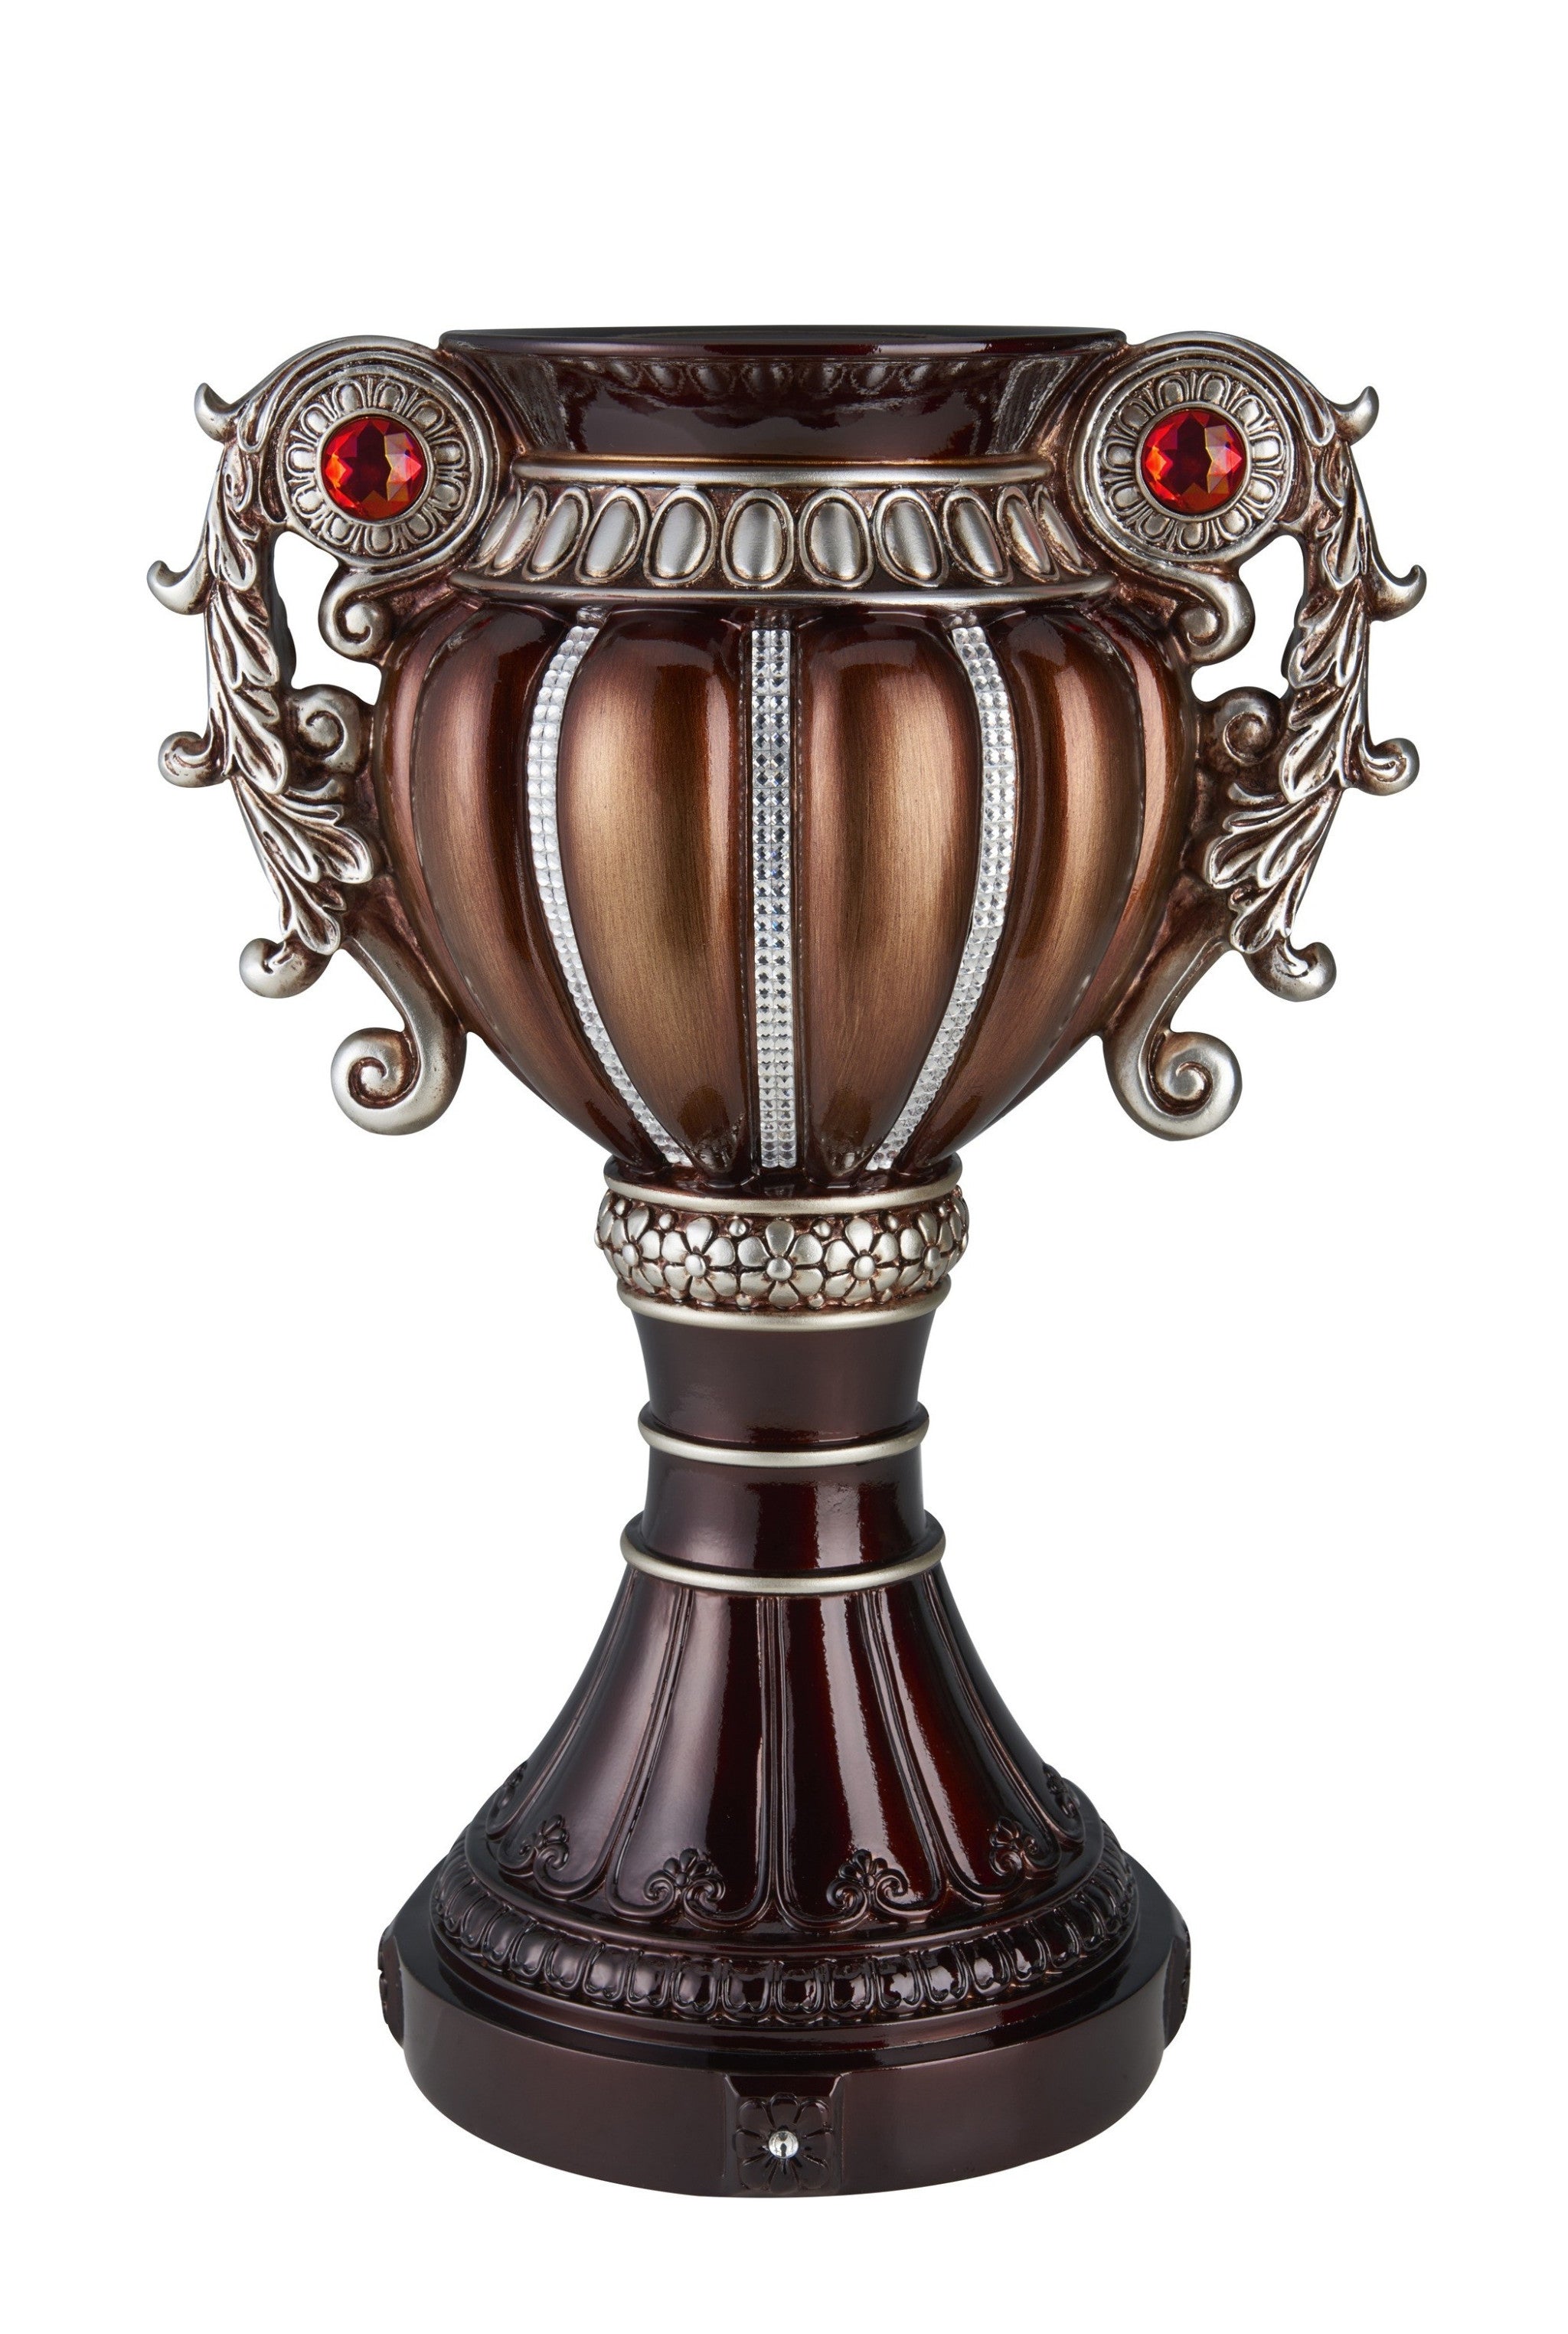 18" Brown Bronze and Silver Polyresin Urn Vase